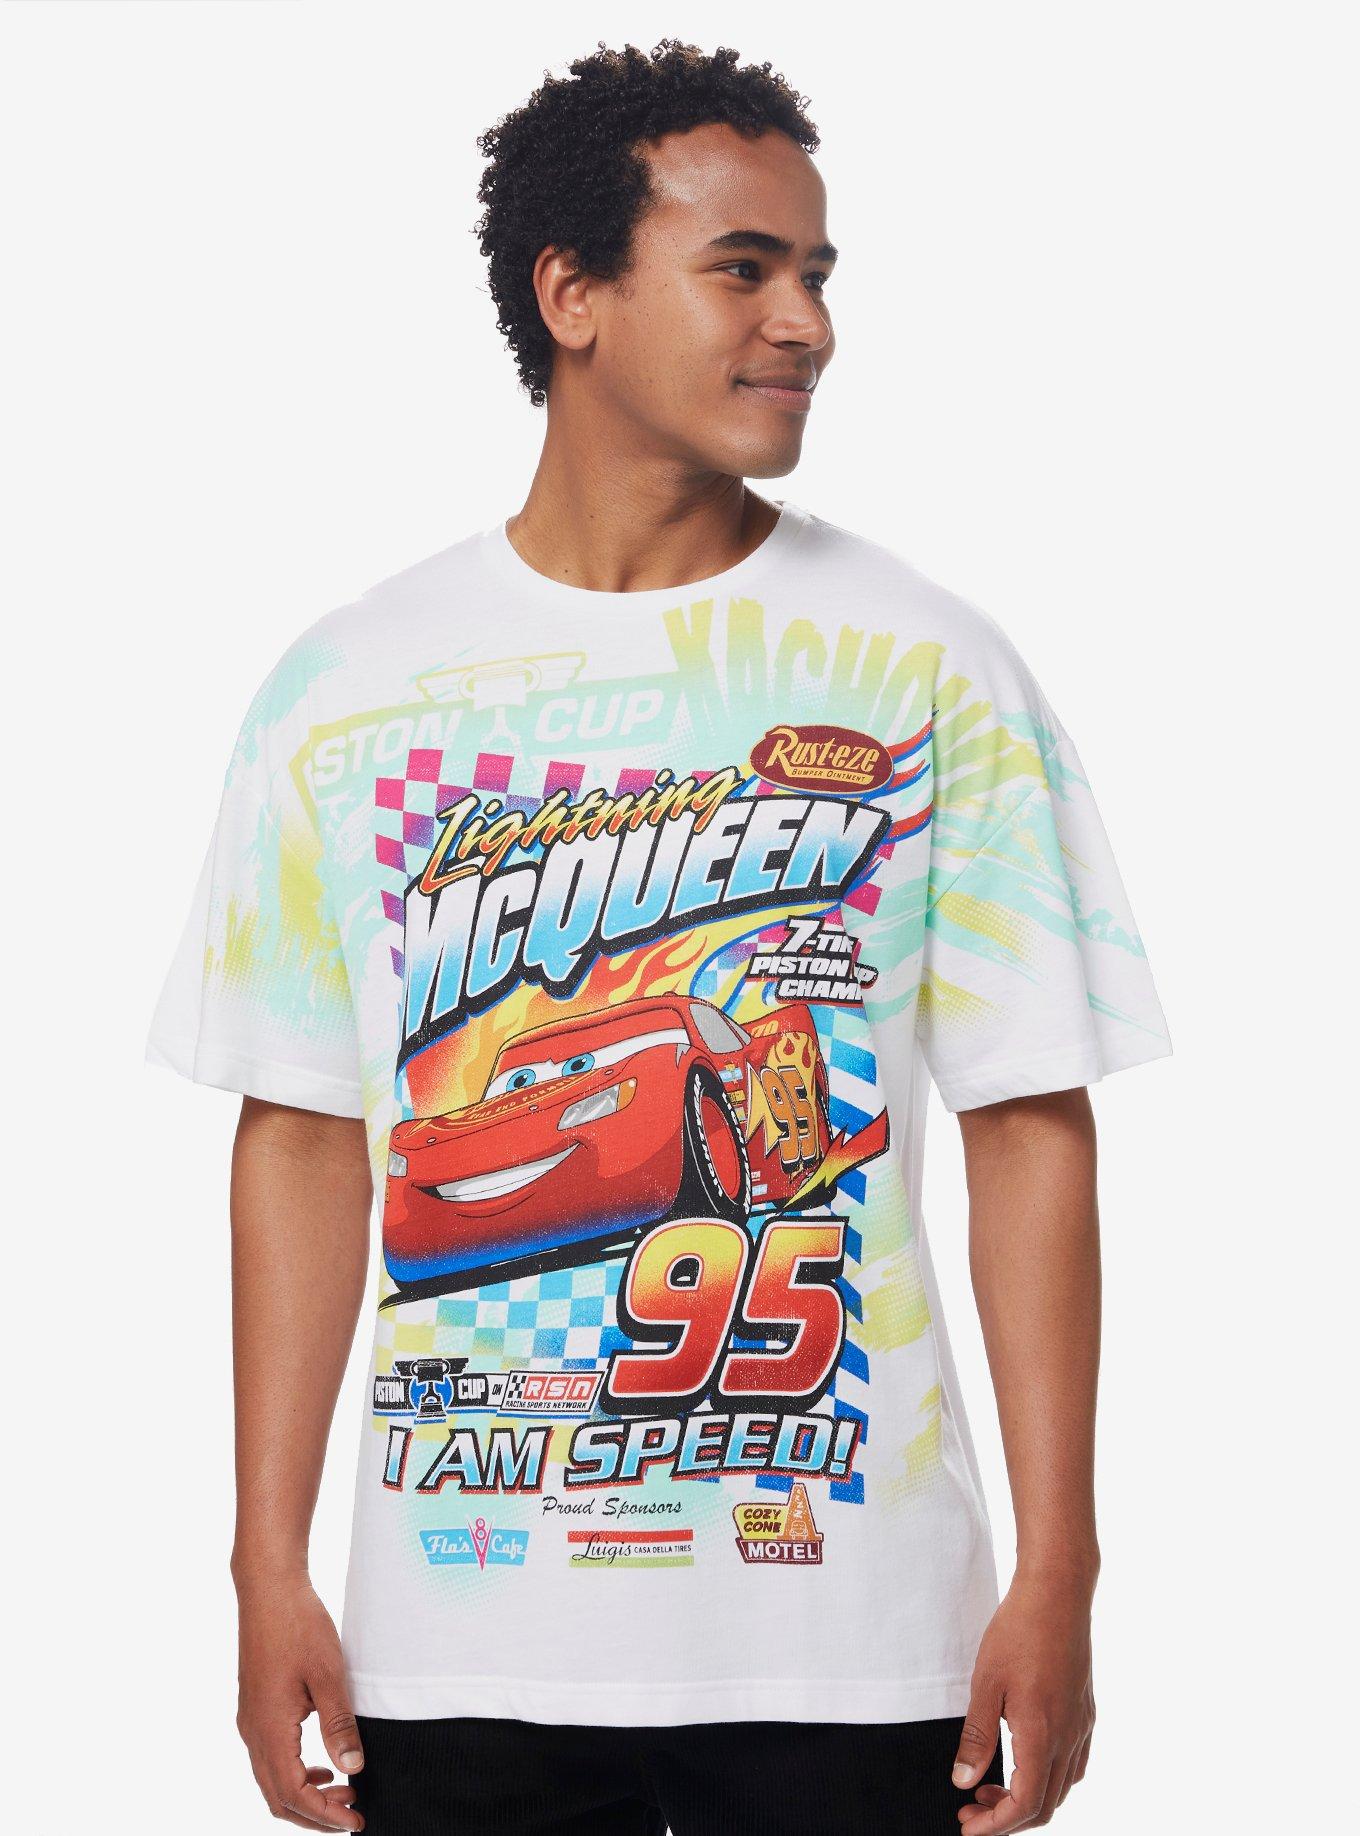 Lightning McQueen's Best Kachows, Racing Sports Network by Disney